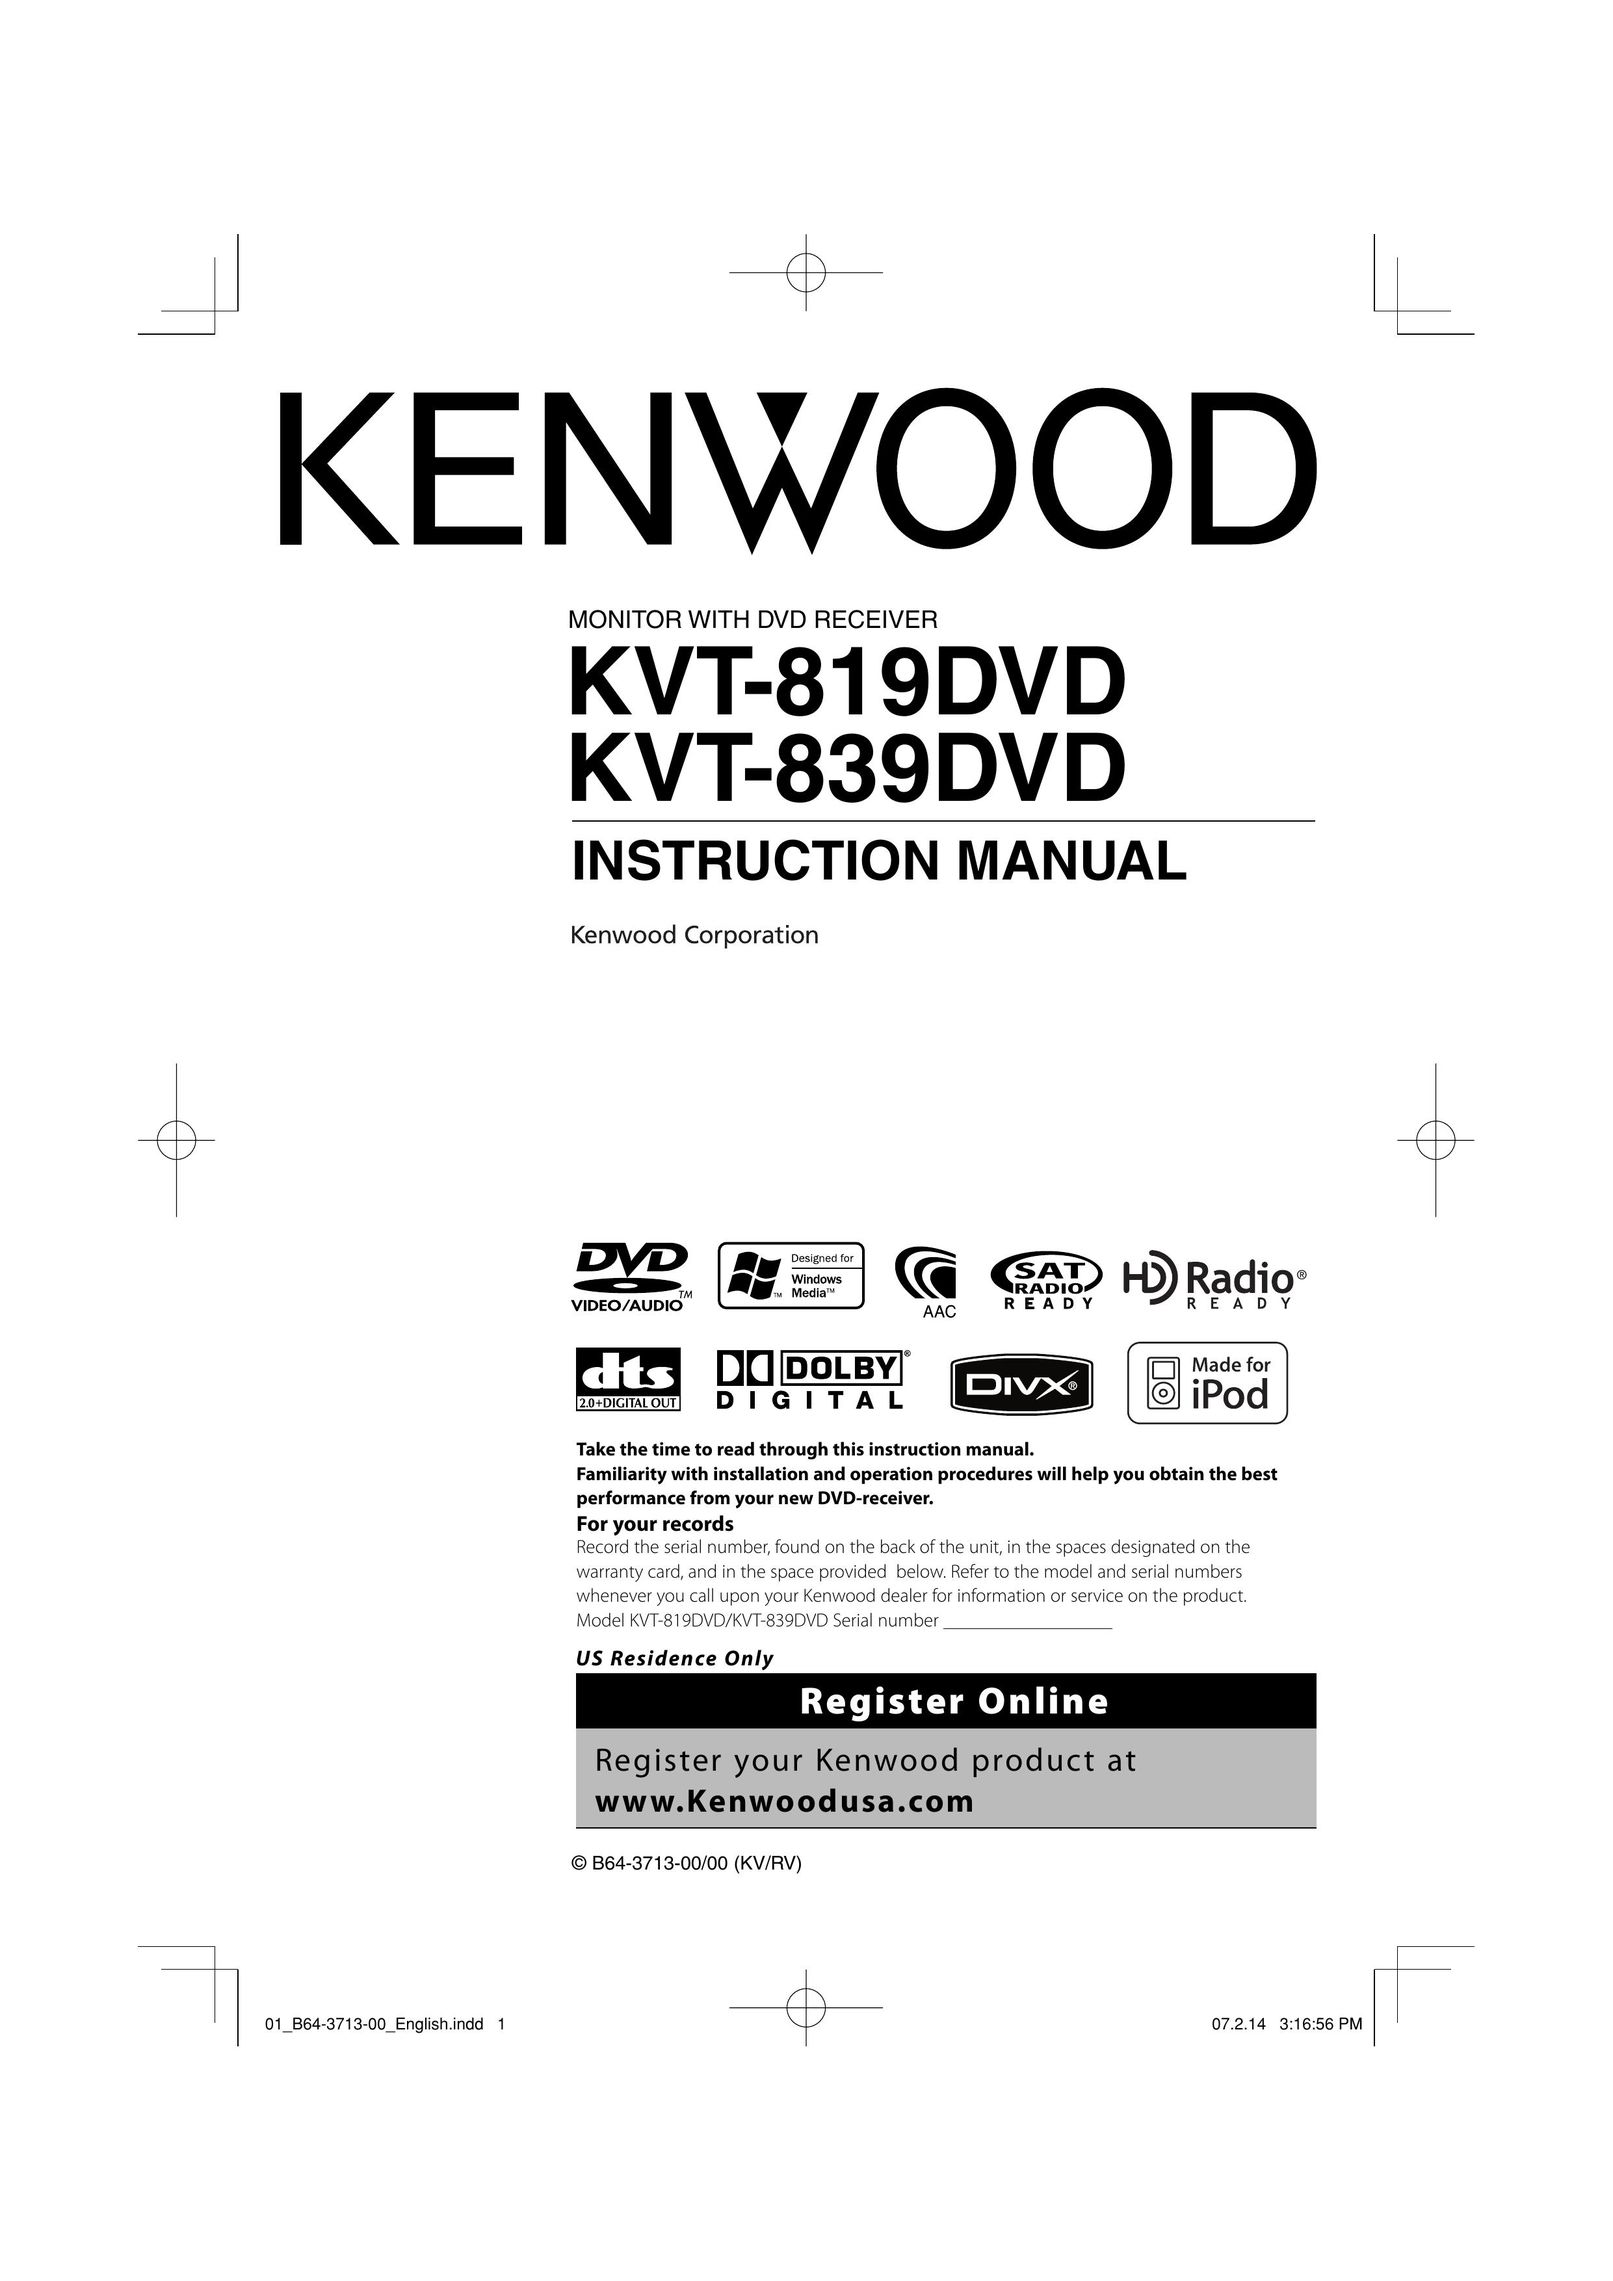 Kenwood KVT-819DVD DVD VCR Combo User Manual